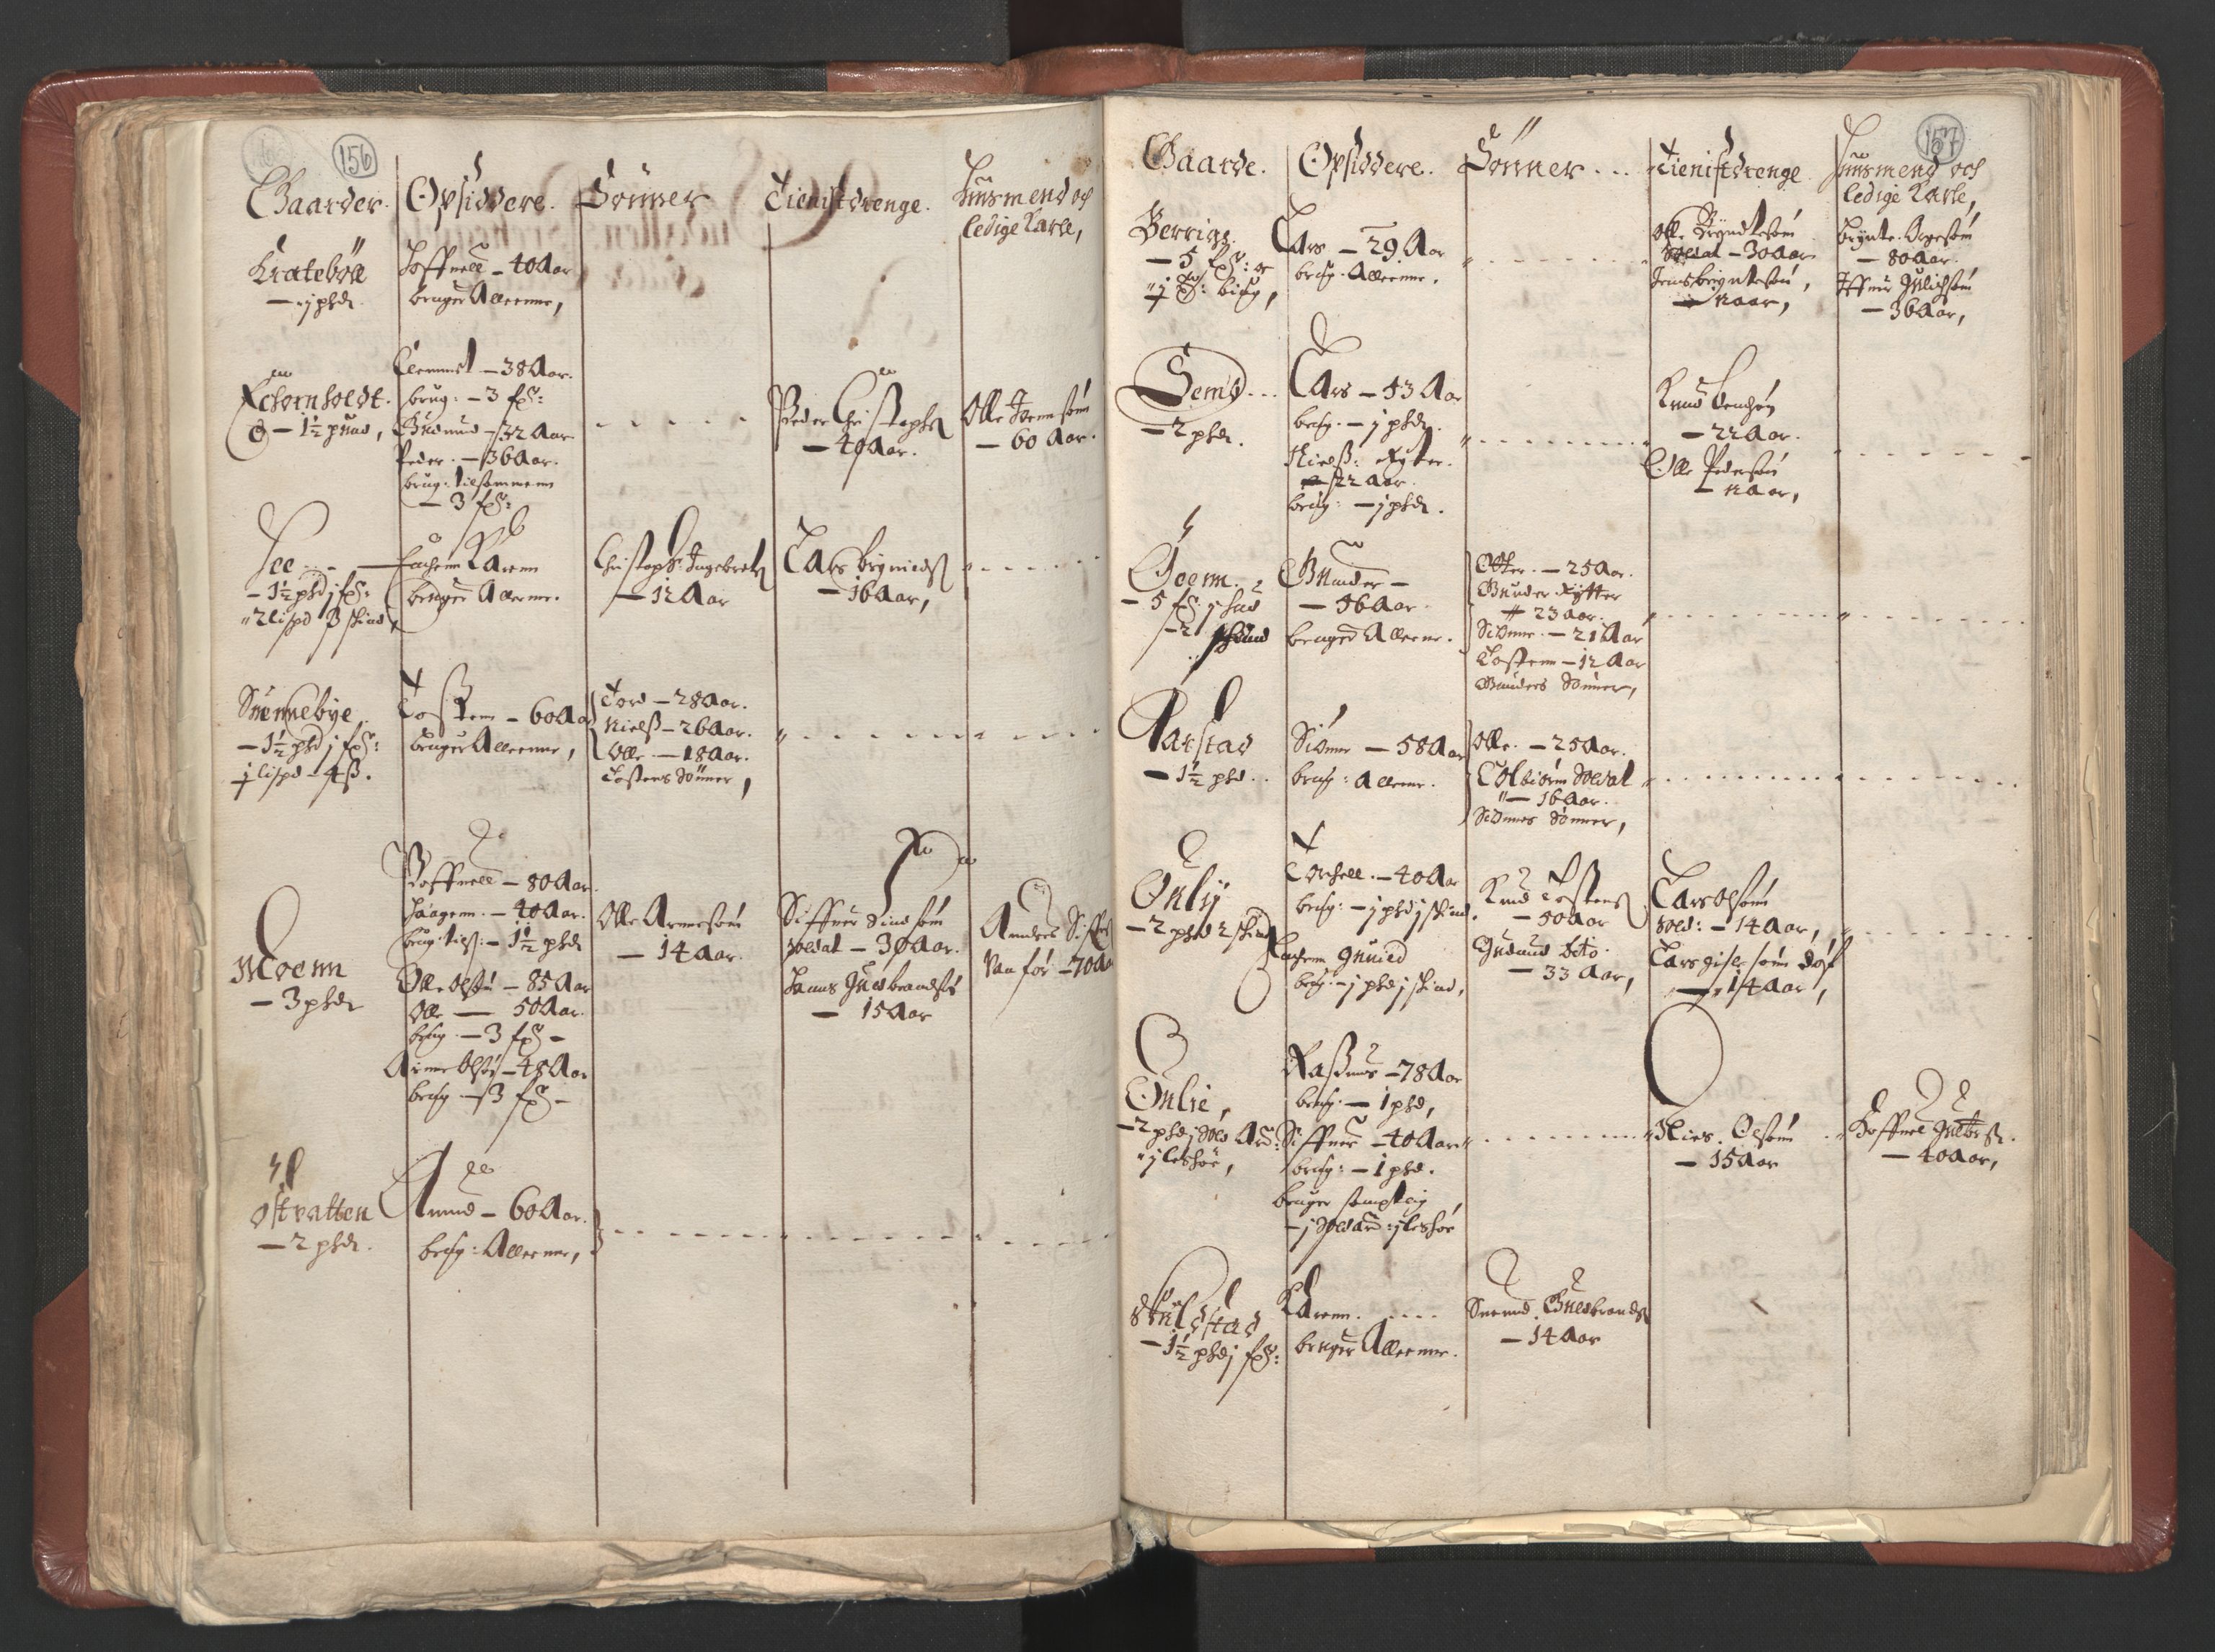 RA, Fogdenes og sorenskrivernes manntall 1664-1666, nr. 3: Hedmark fogderi og Solør, Østerdal og Odal fogderi, 1664, s. 156-157